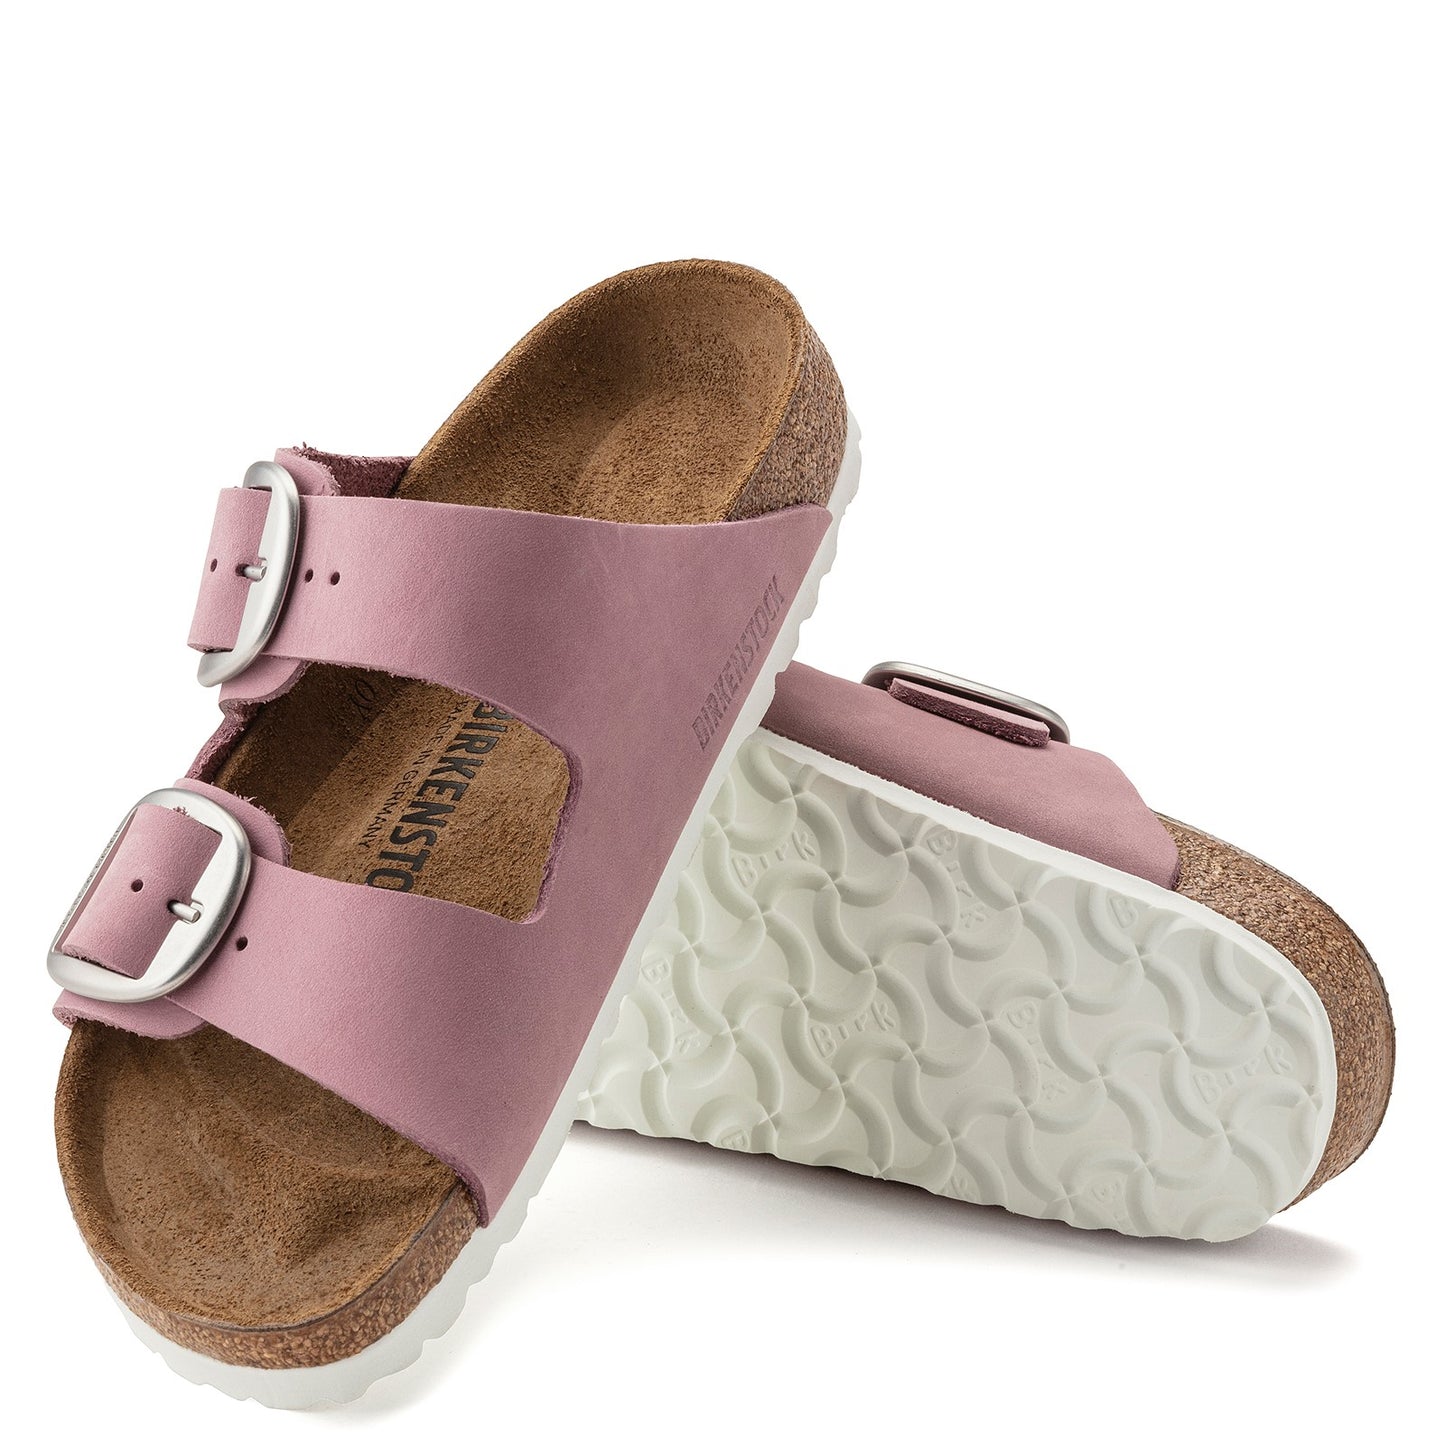 Peltz Shoes  Women's Birkenstock Arizona Big Buckle Sandal- Narrow Width ORCHID 1022 161 N